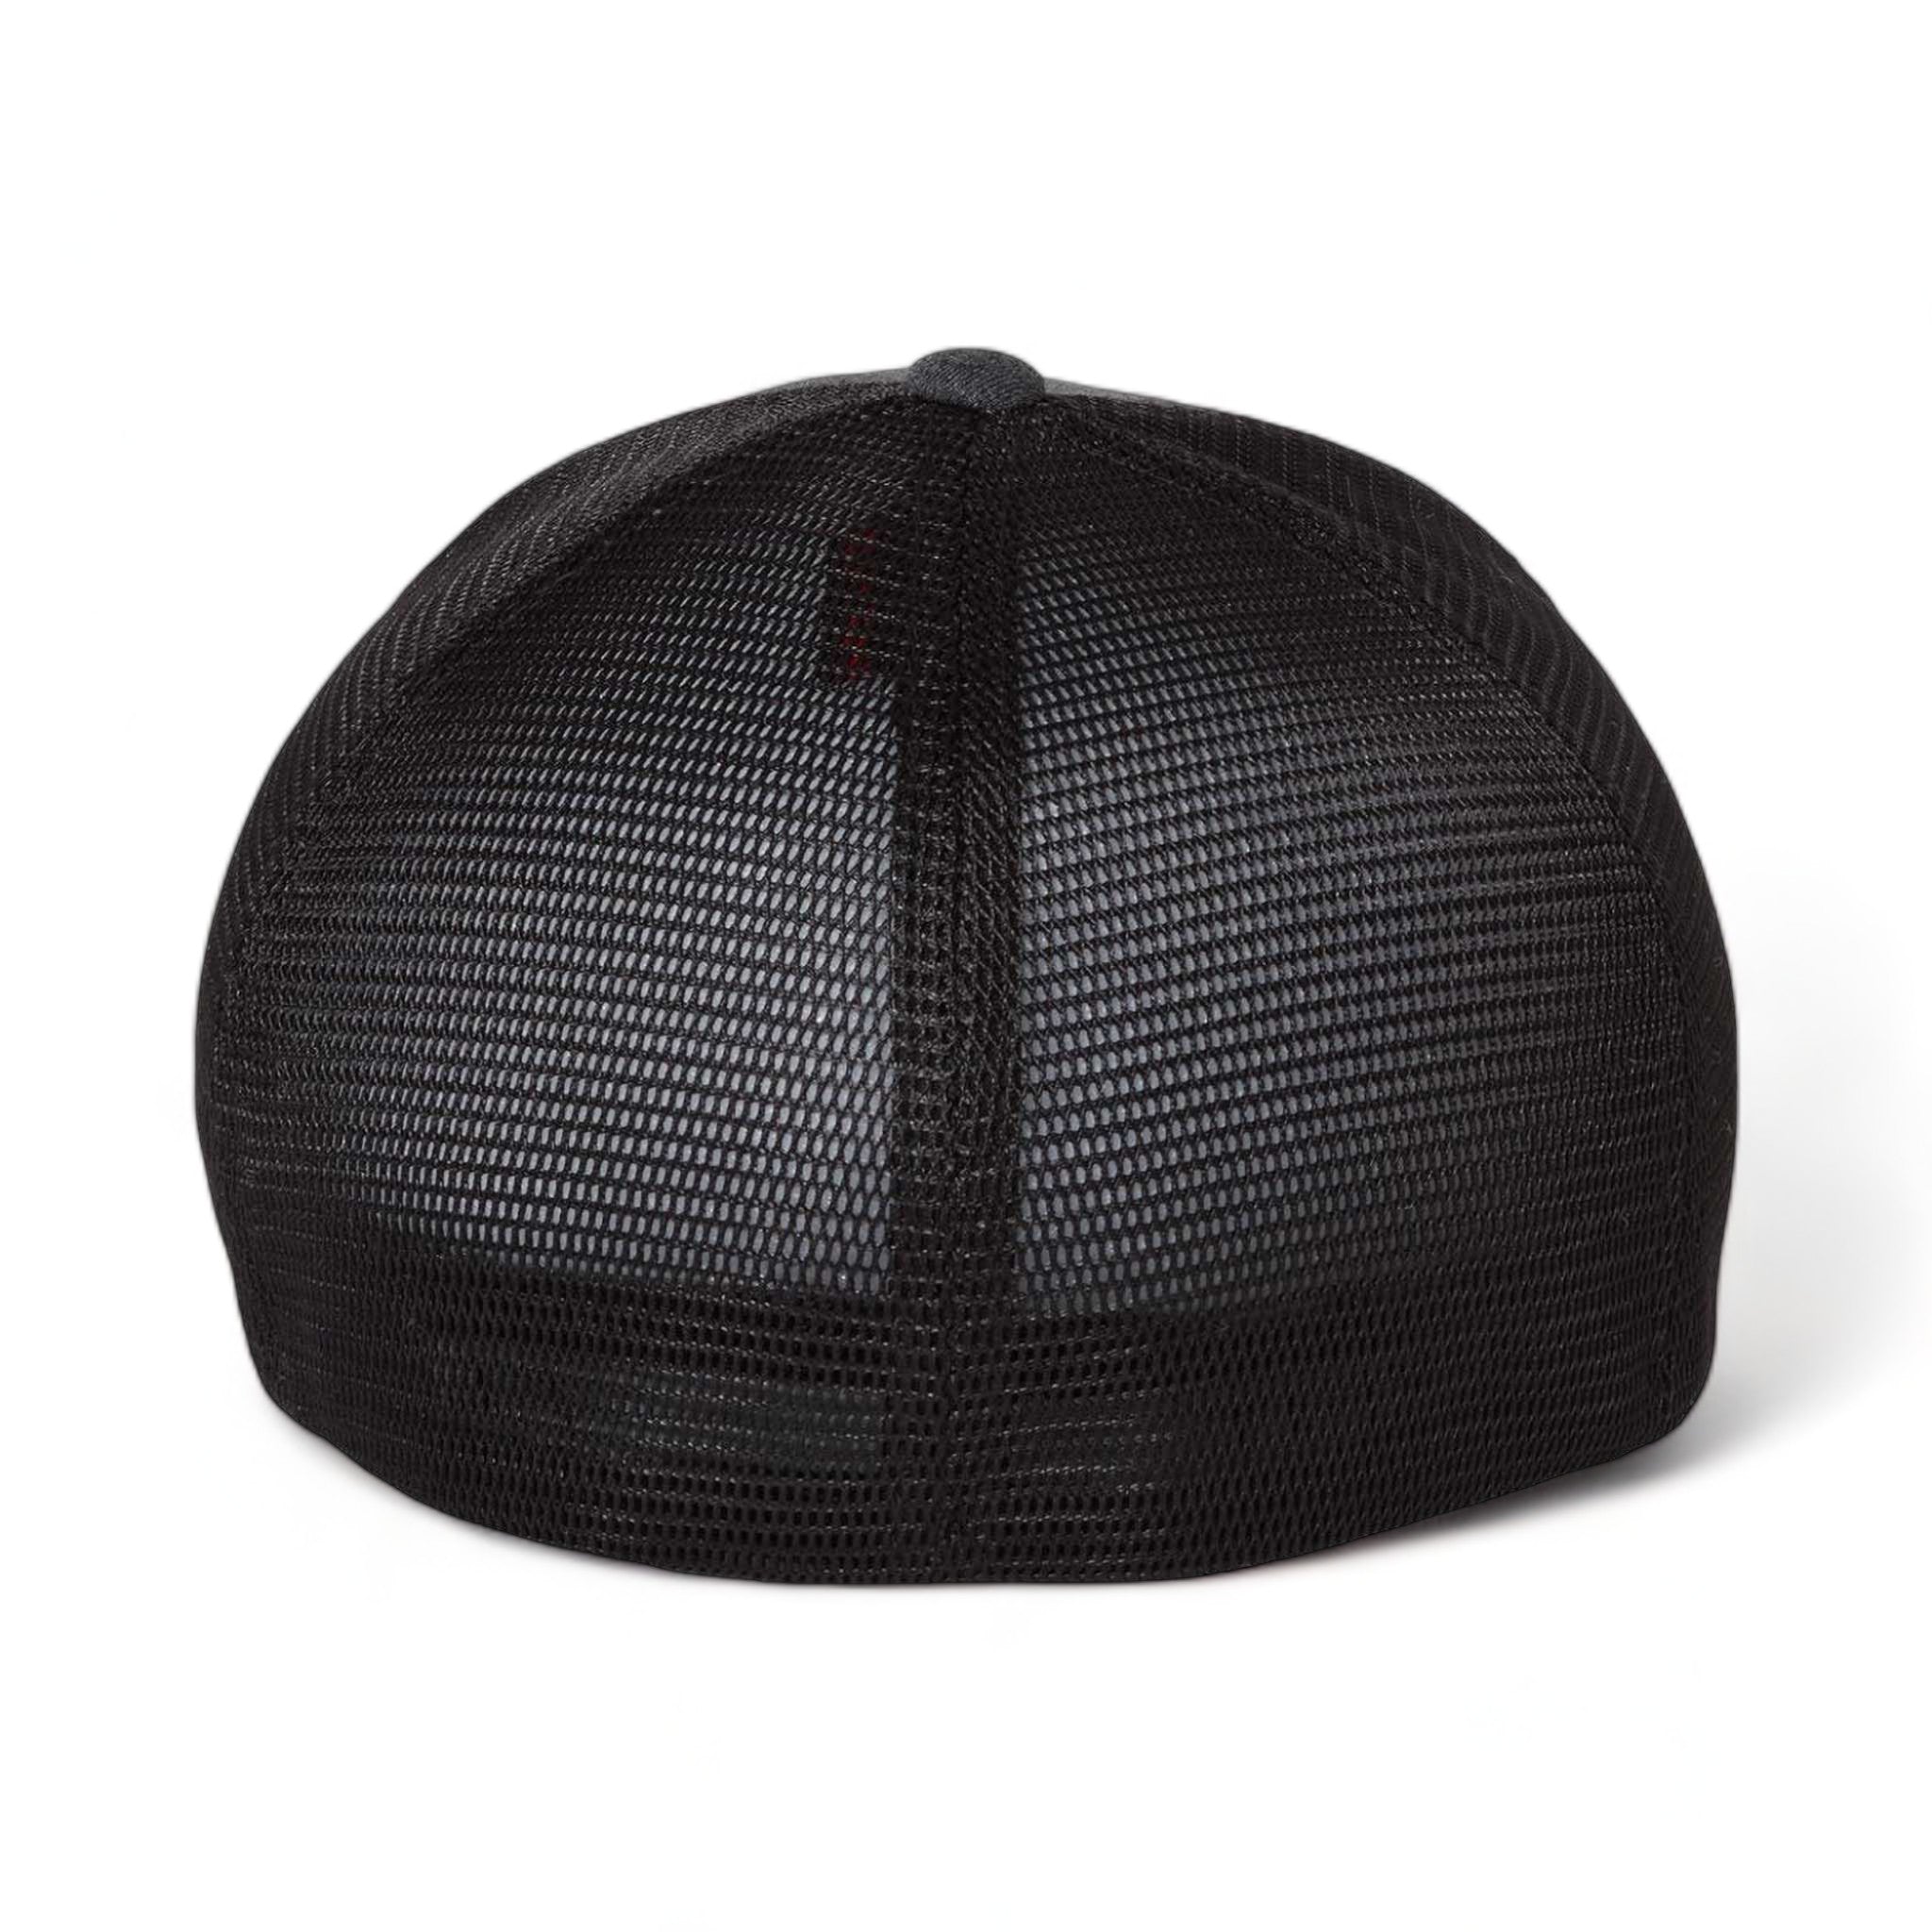 Back view of Flexfit 5511UP custom hat in mélange dark grey and black